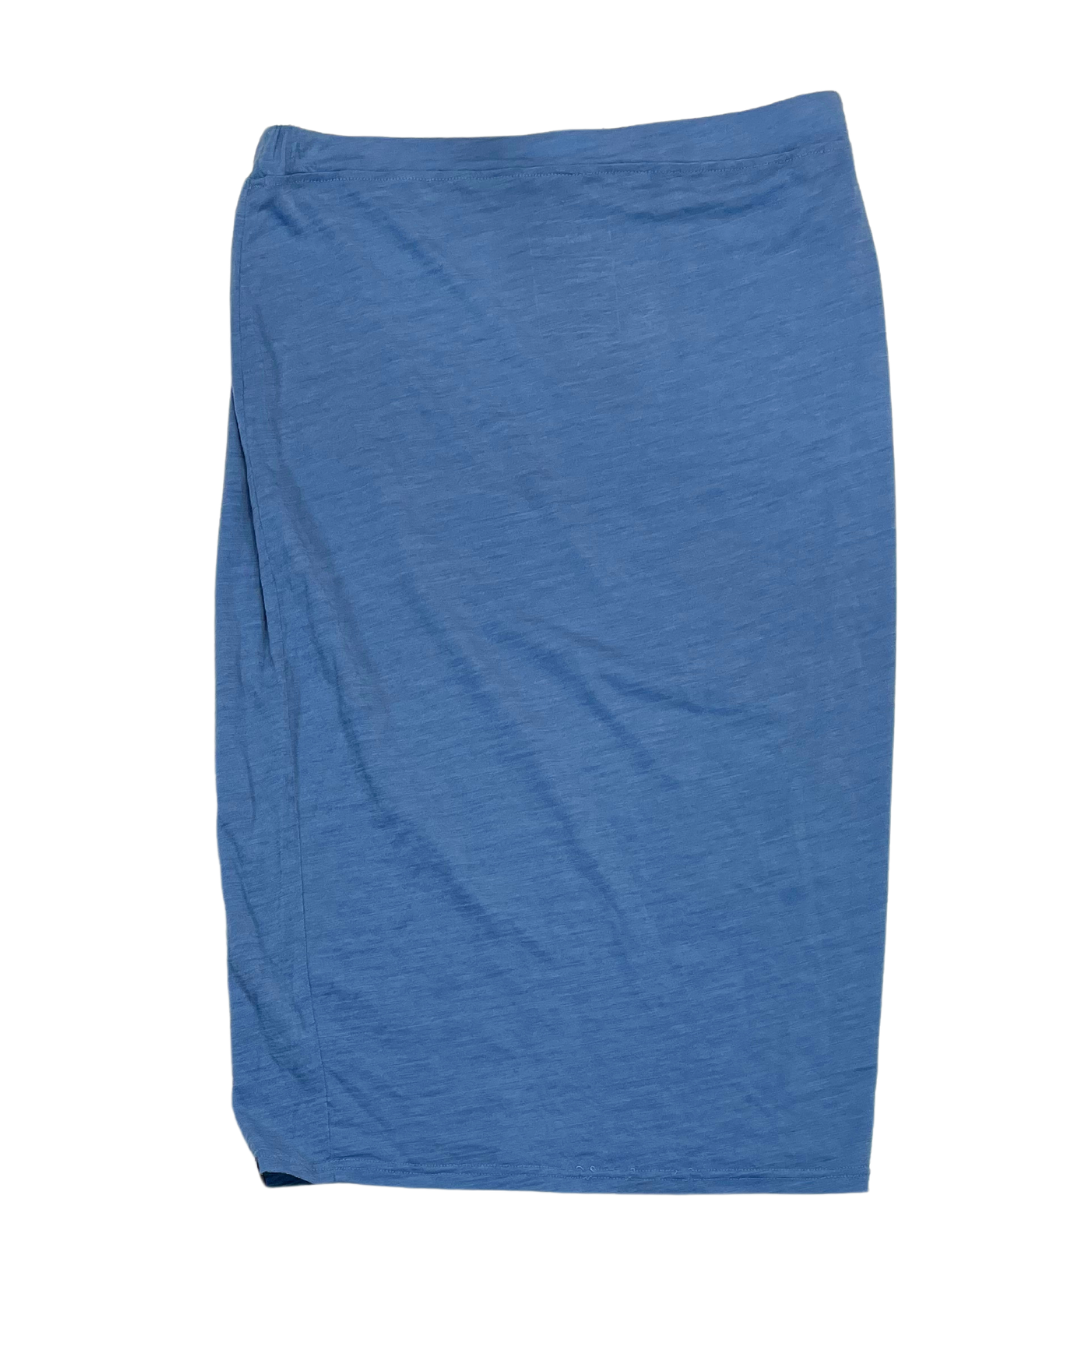 Finisterre Blue Pencil Skirt